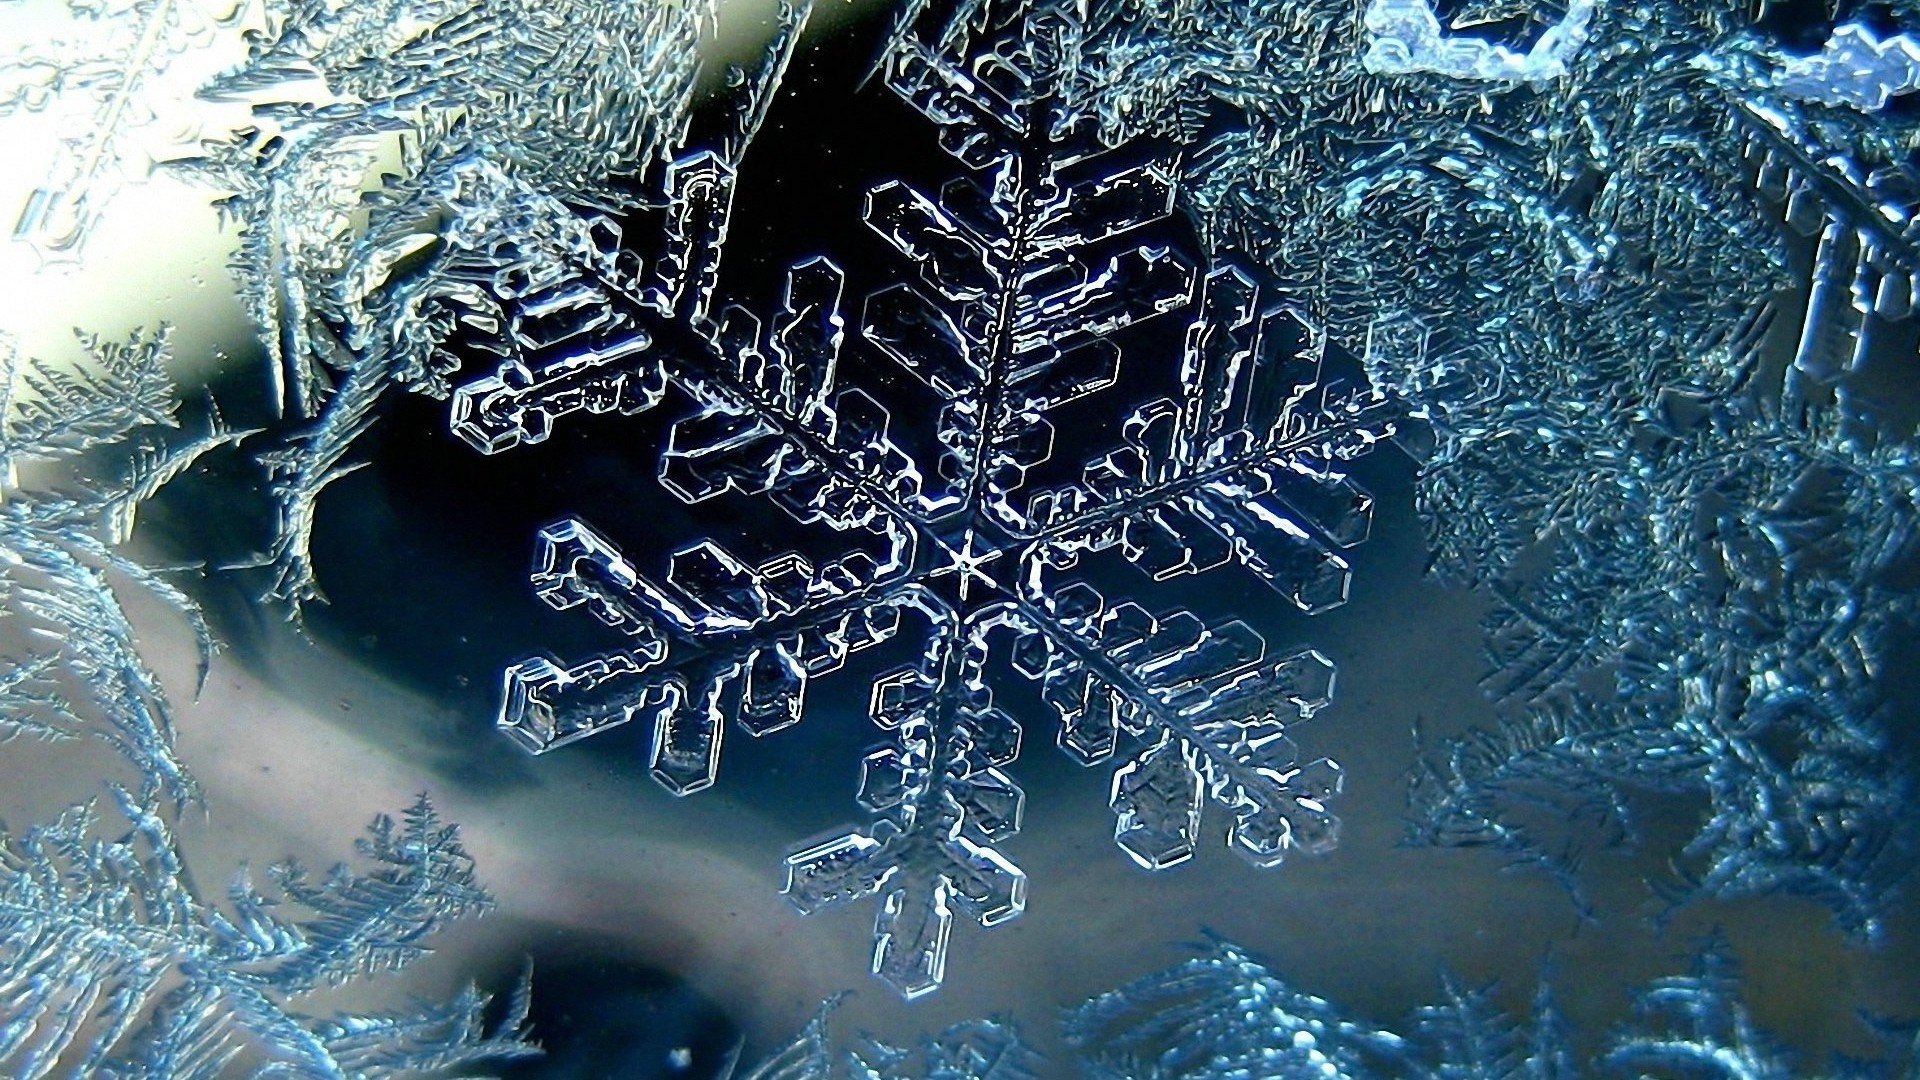 Snowflake Wallpaper Image